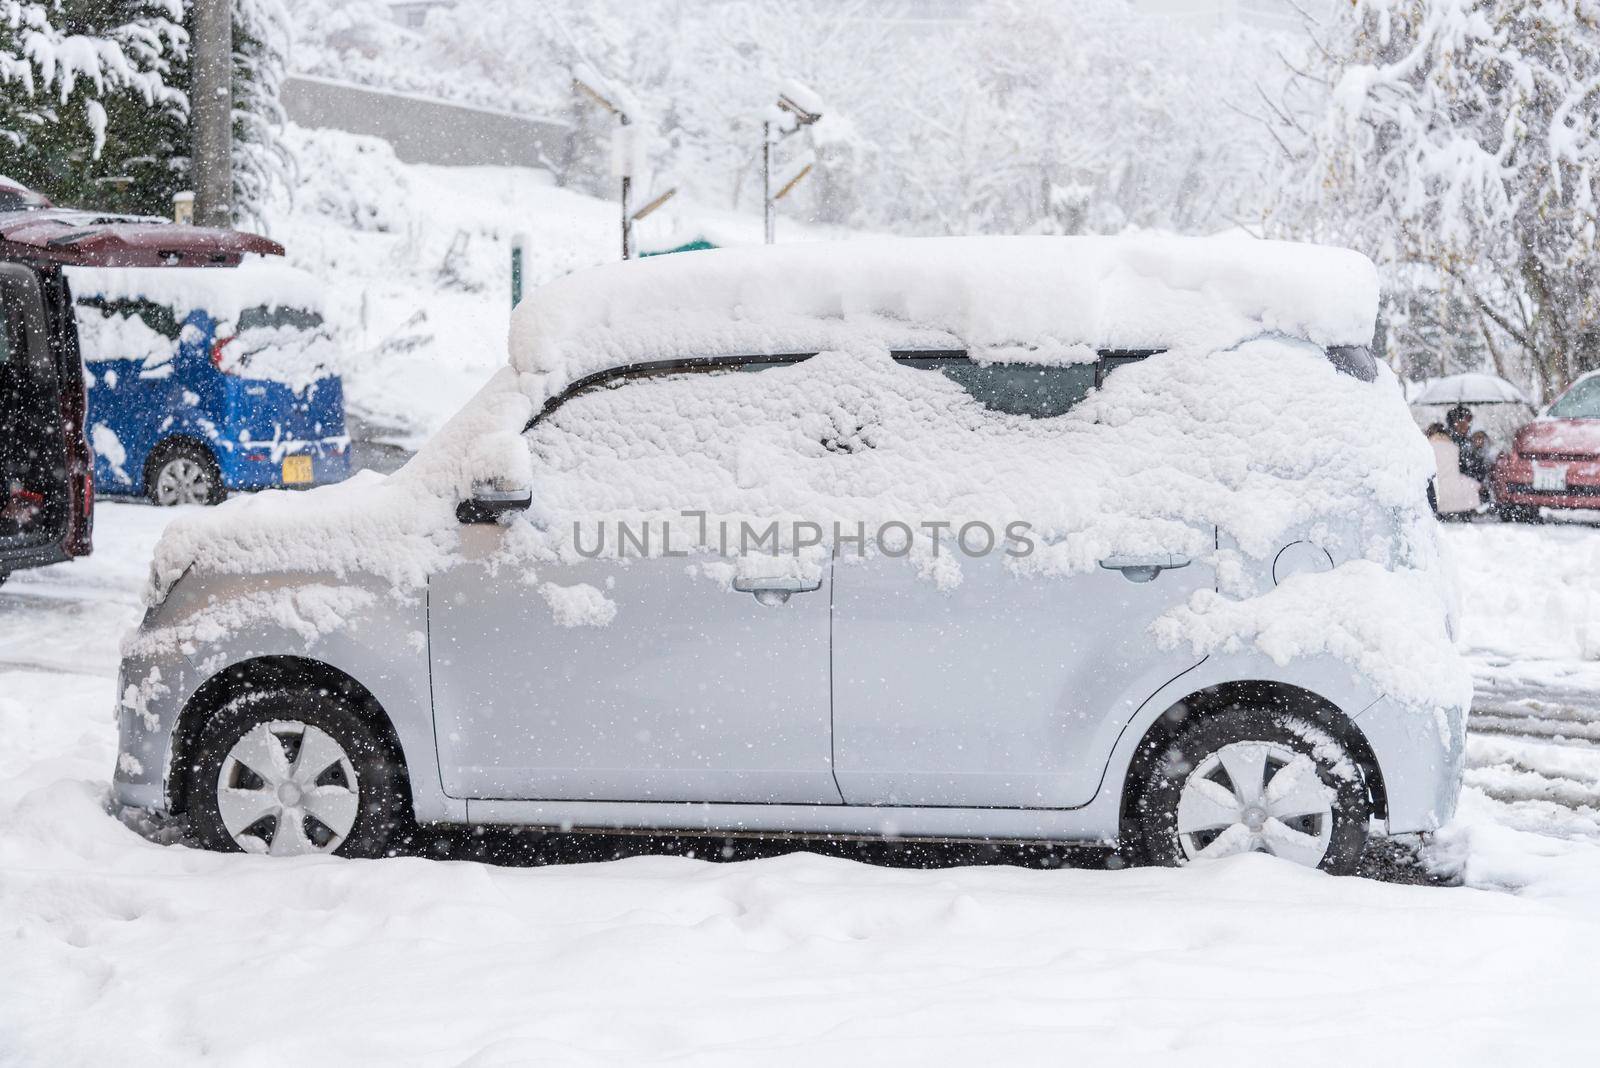 Fresh white snow falling at public park cover road and car in winter season at Kawaguchiko,Japan. by Nuamfolio